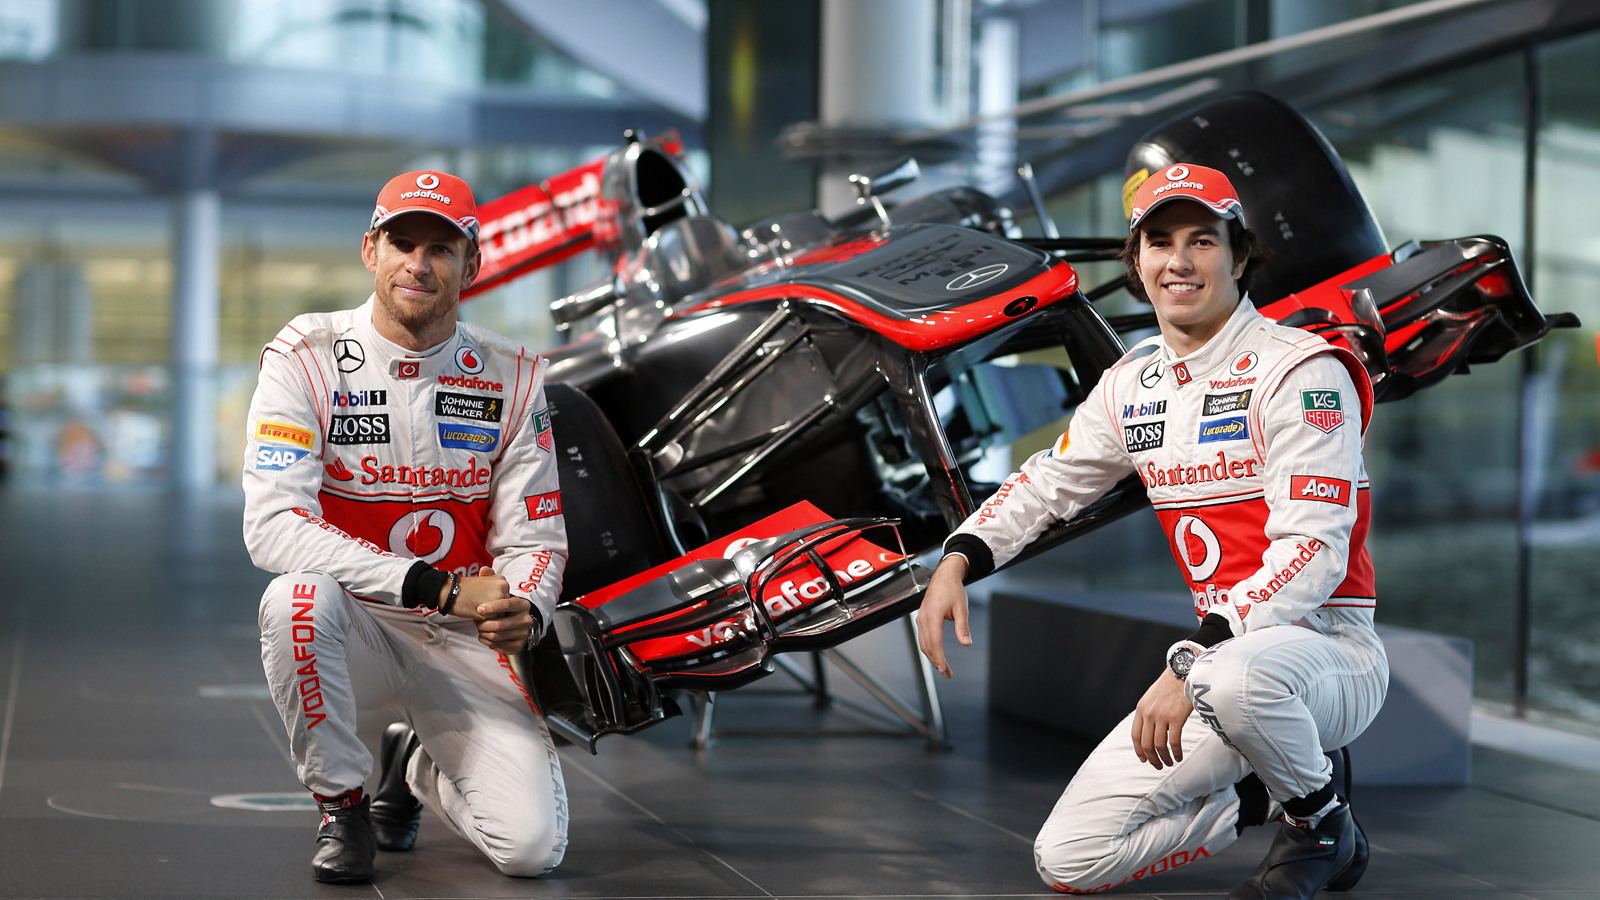 McLaren MP4-28 2013 Formula One race car